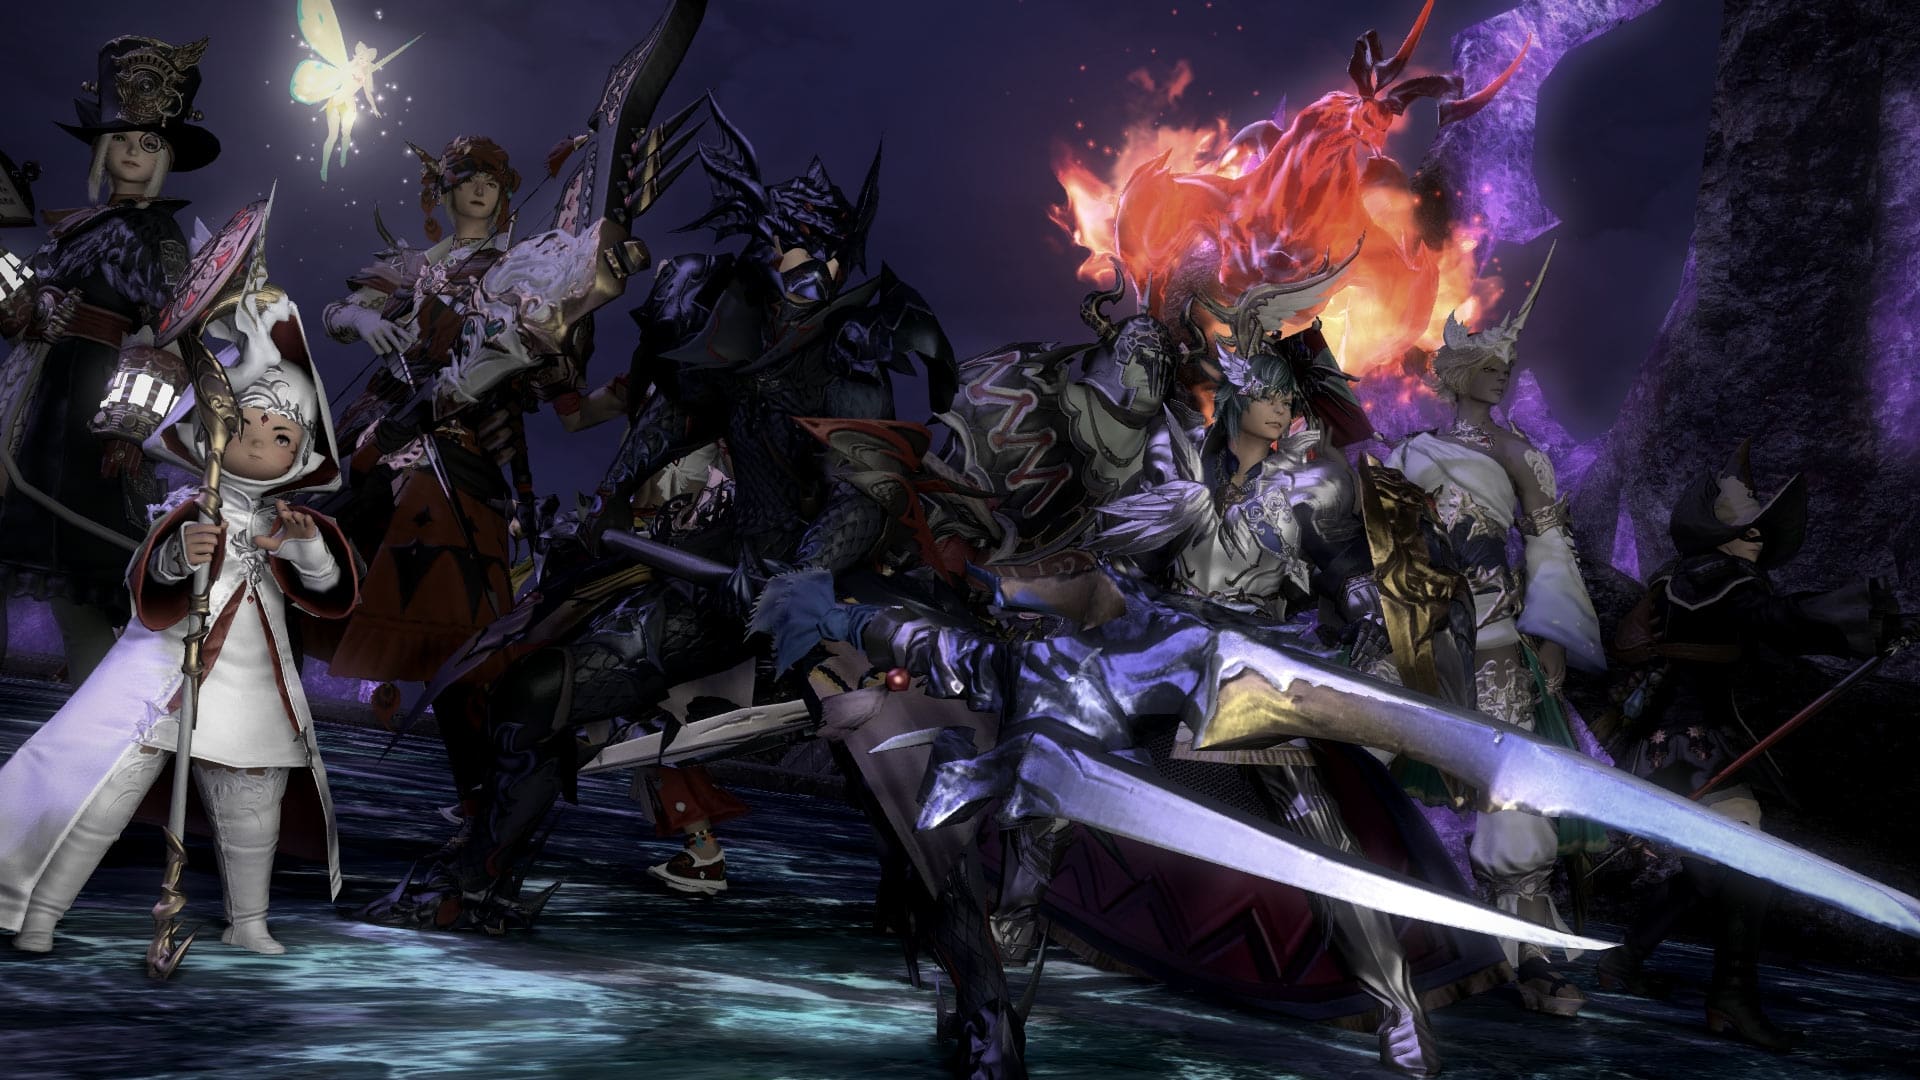 Final Fantasy Xiv Shares New Key Visuals And Artwork Nova Crystallis